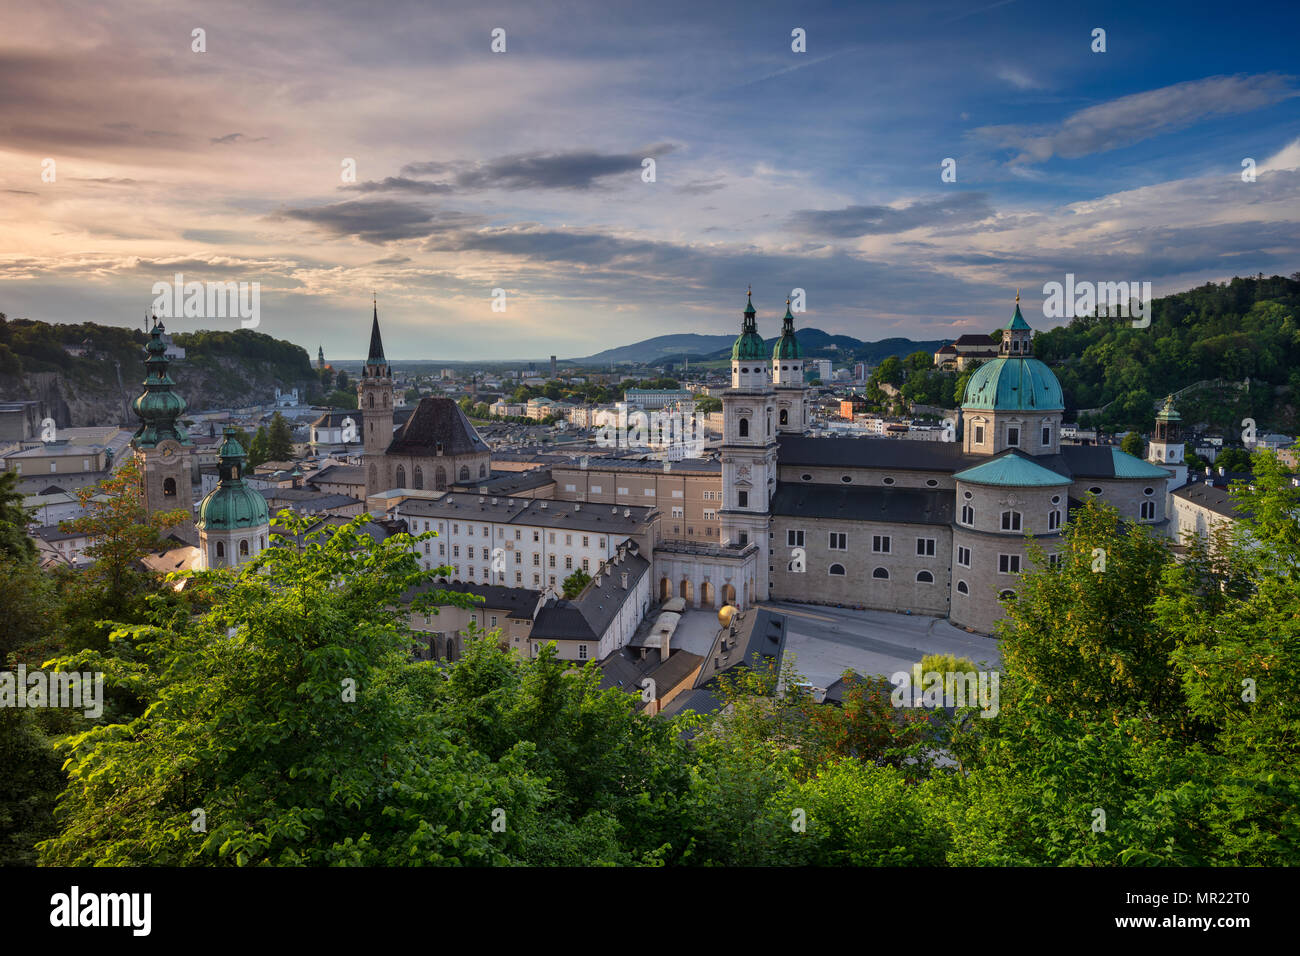 Salzburg, Austria. Cityscape image of the Salzburg, Austria with Salzburg Cathedral during spring sunset. Stock Photo